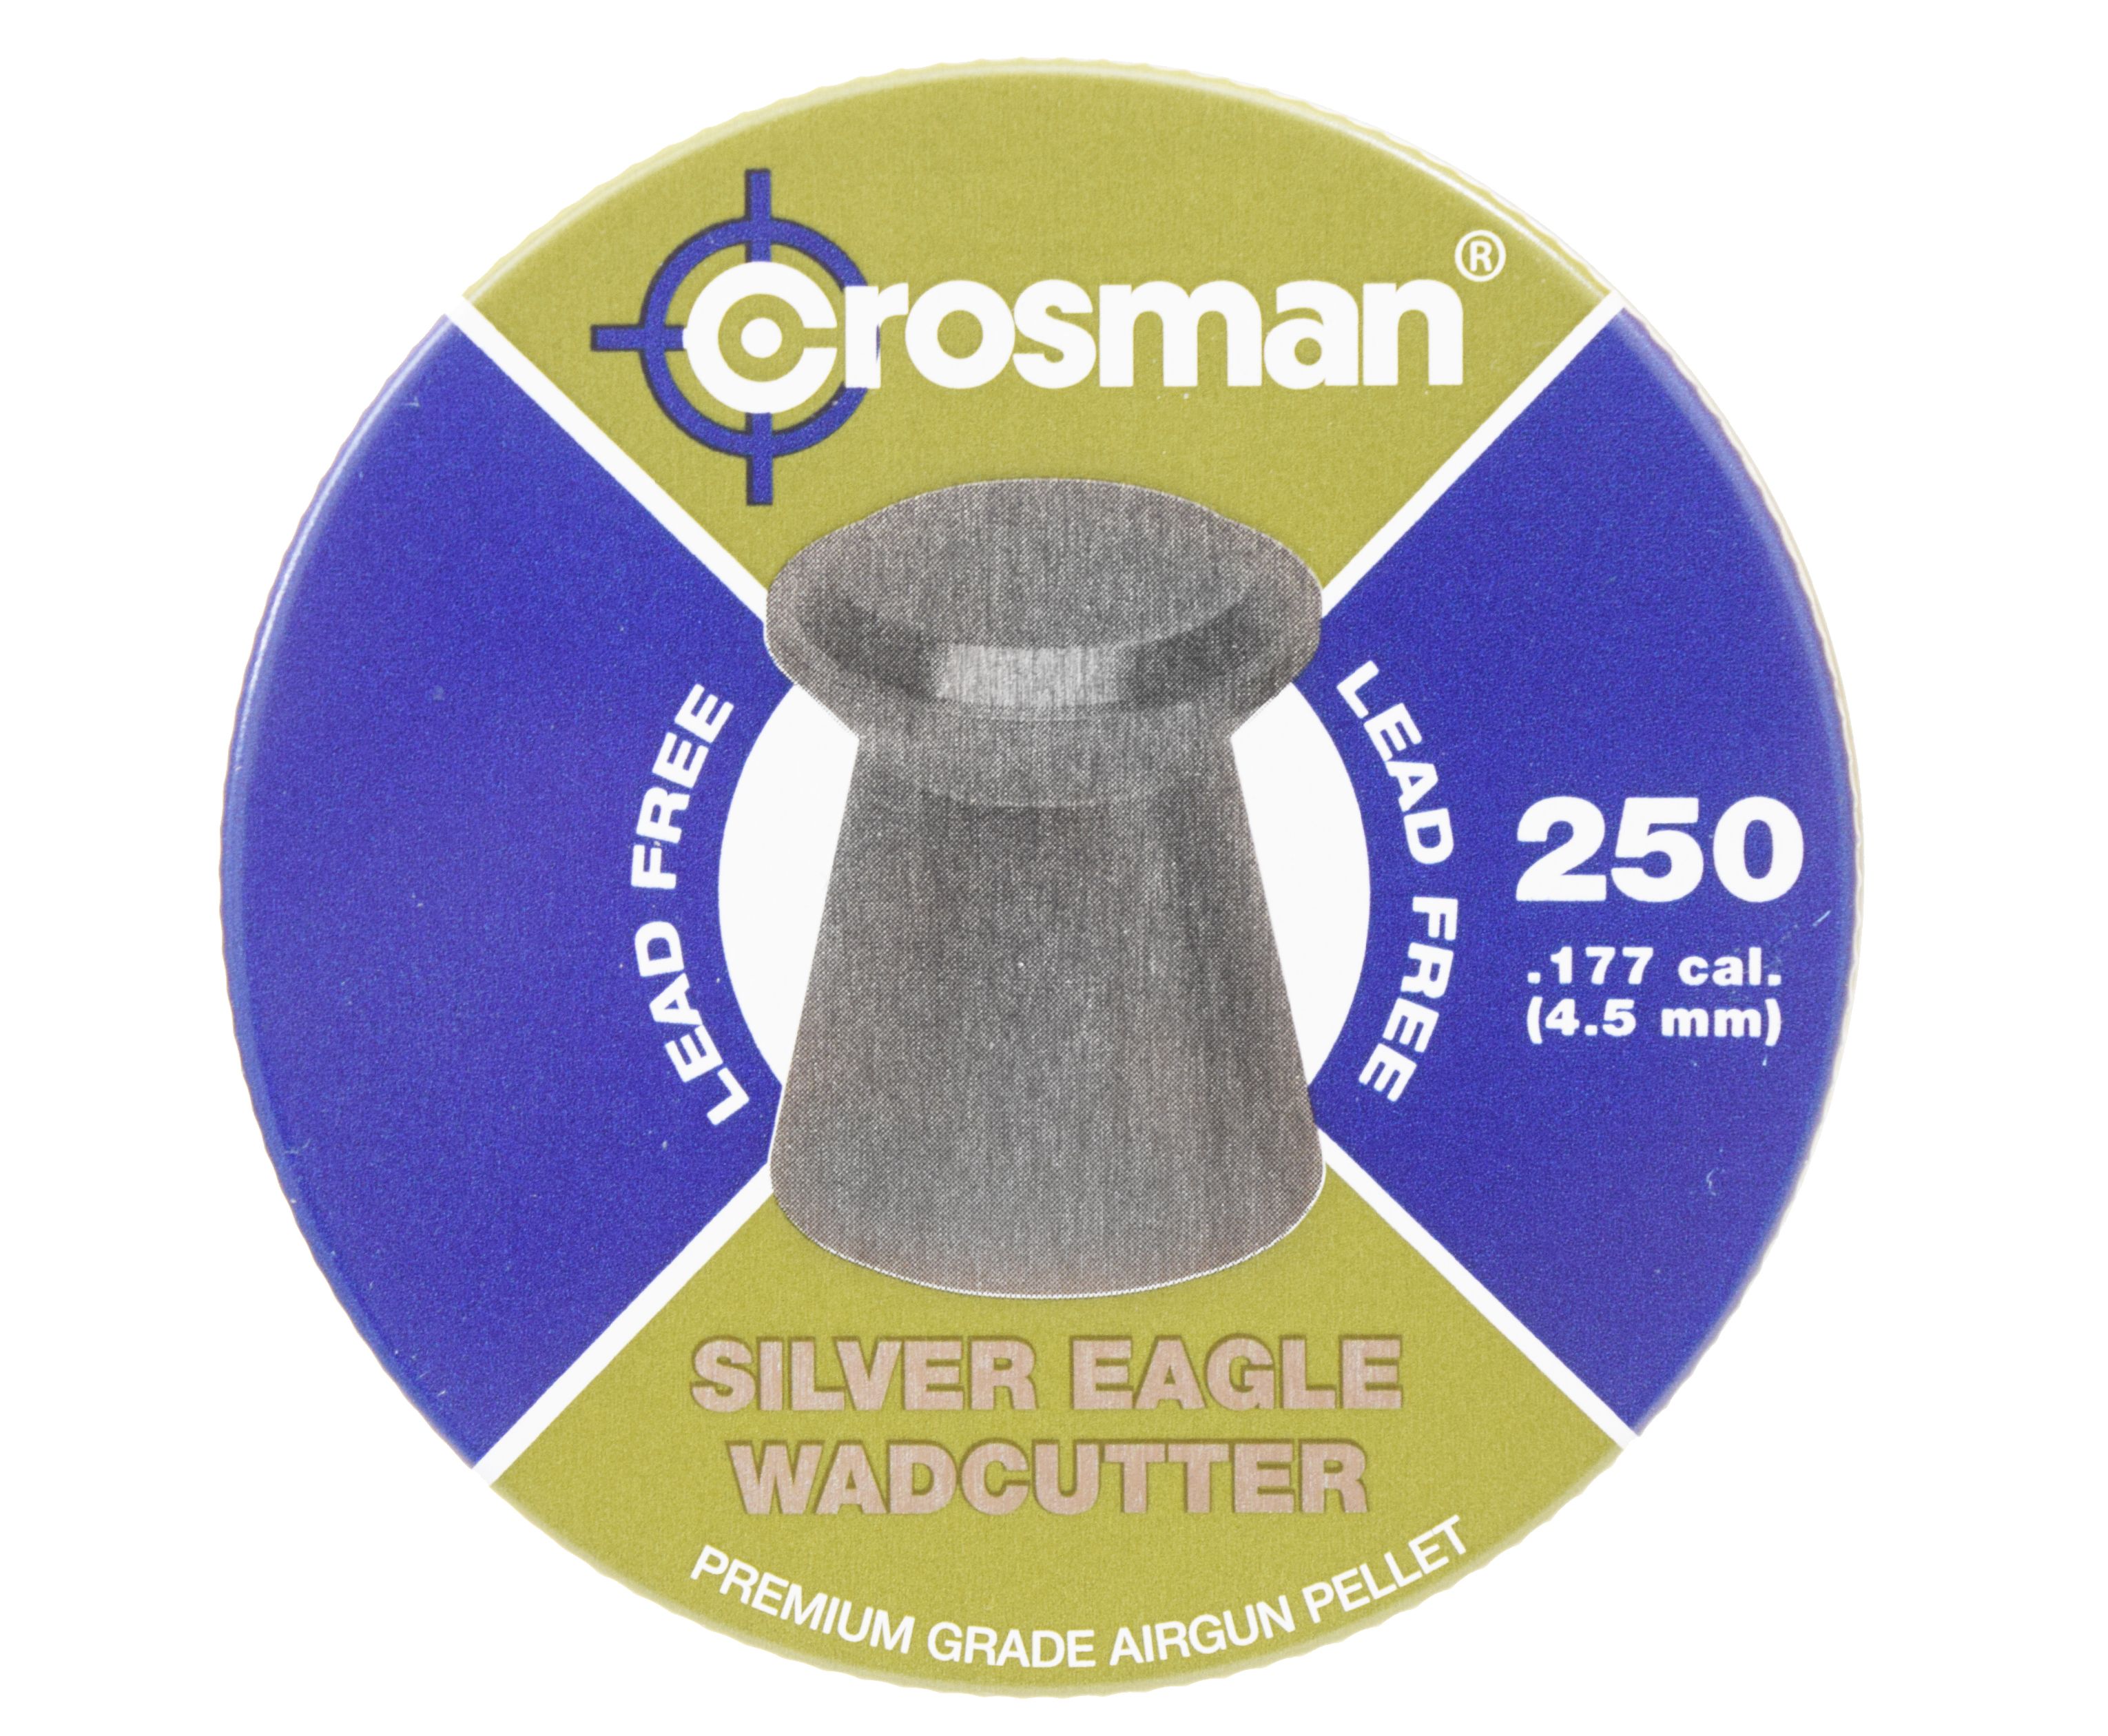 Пули пневматические Crosman Silver Eagle WC 4.5 мм 250 шт 0.31 грамм